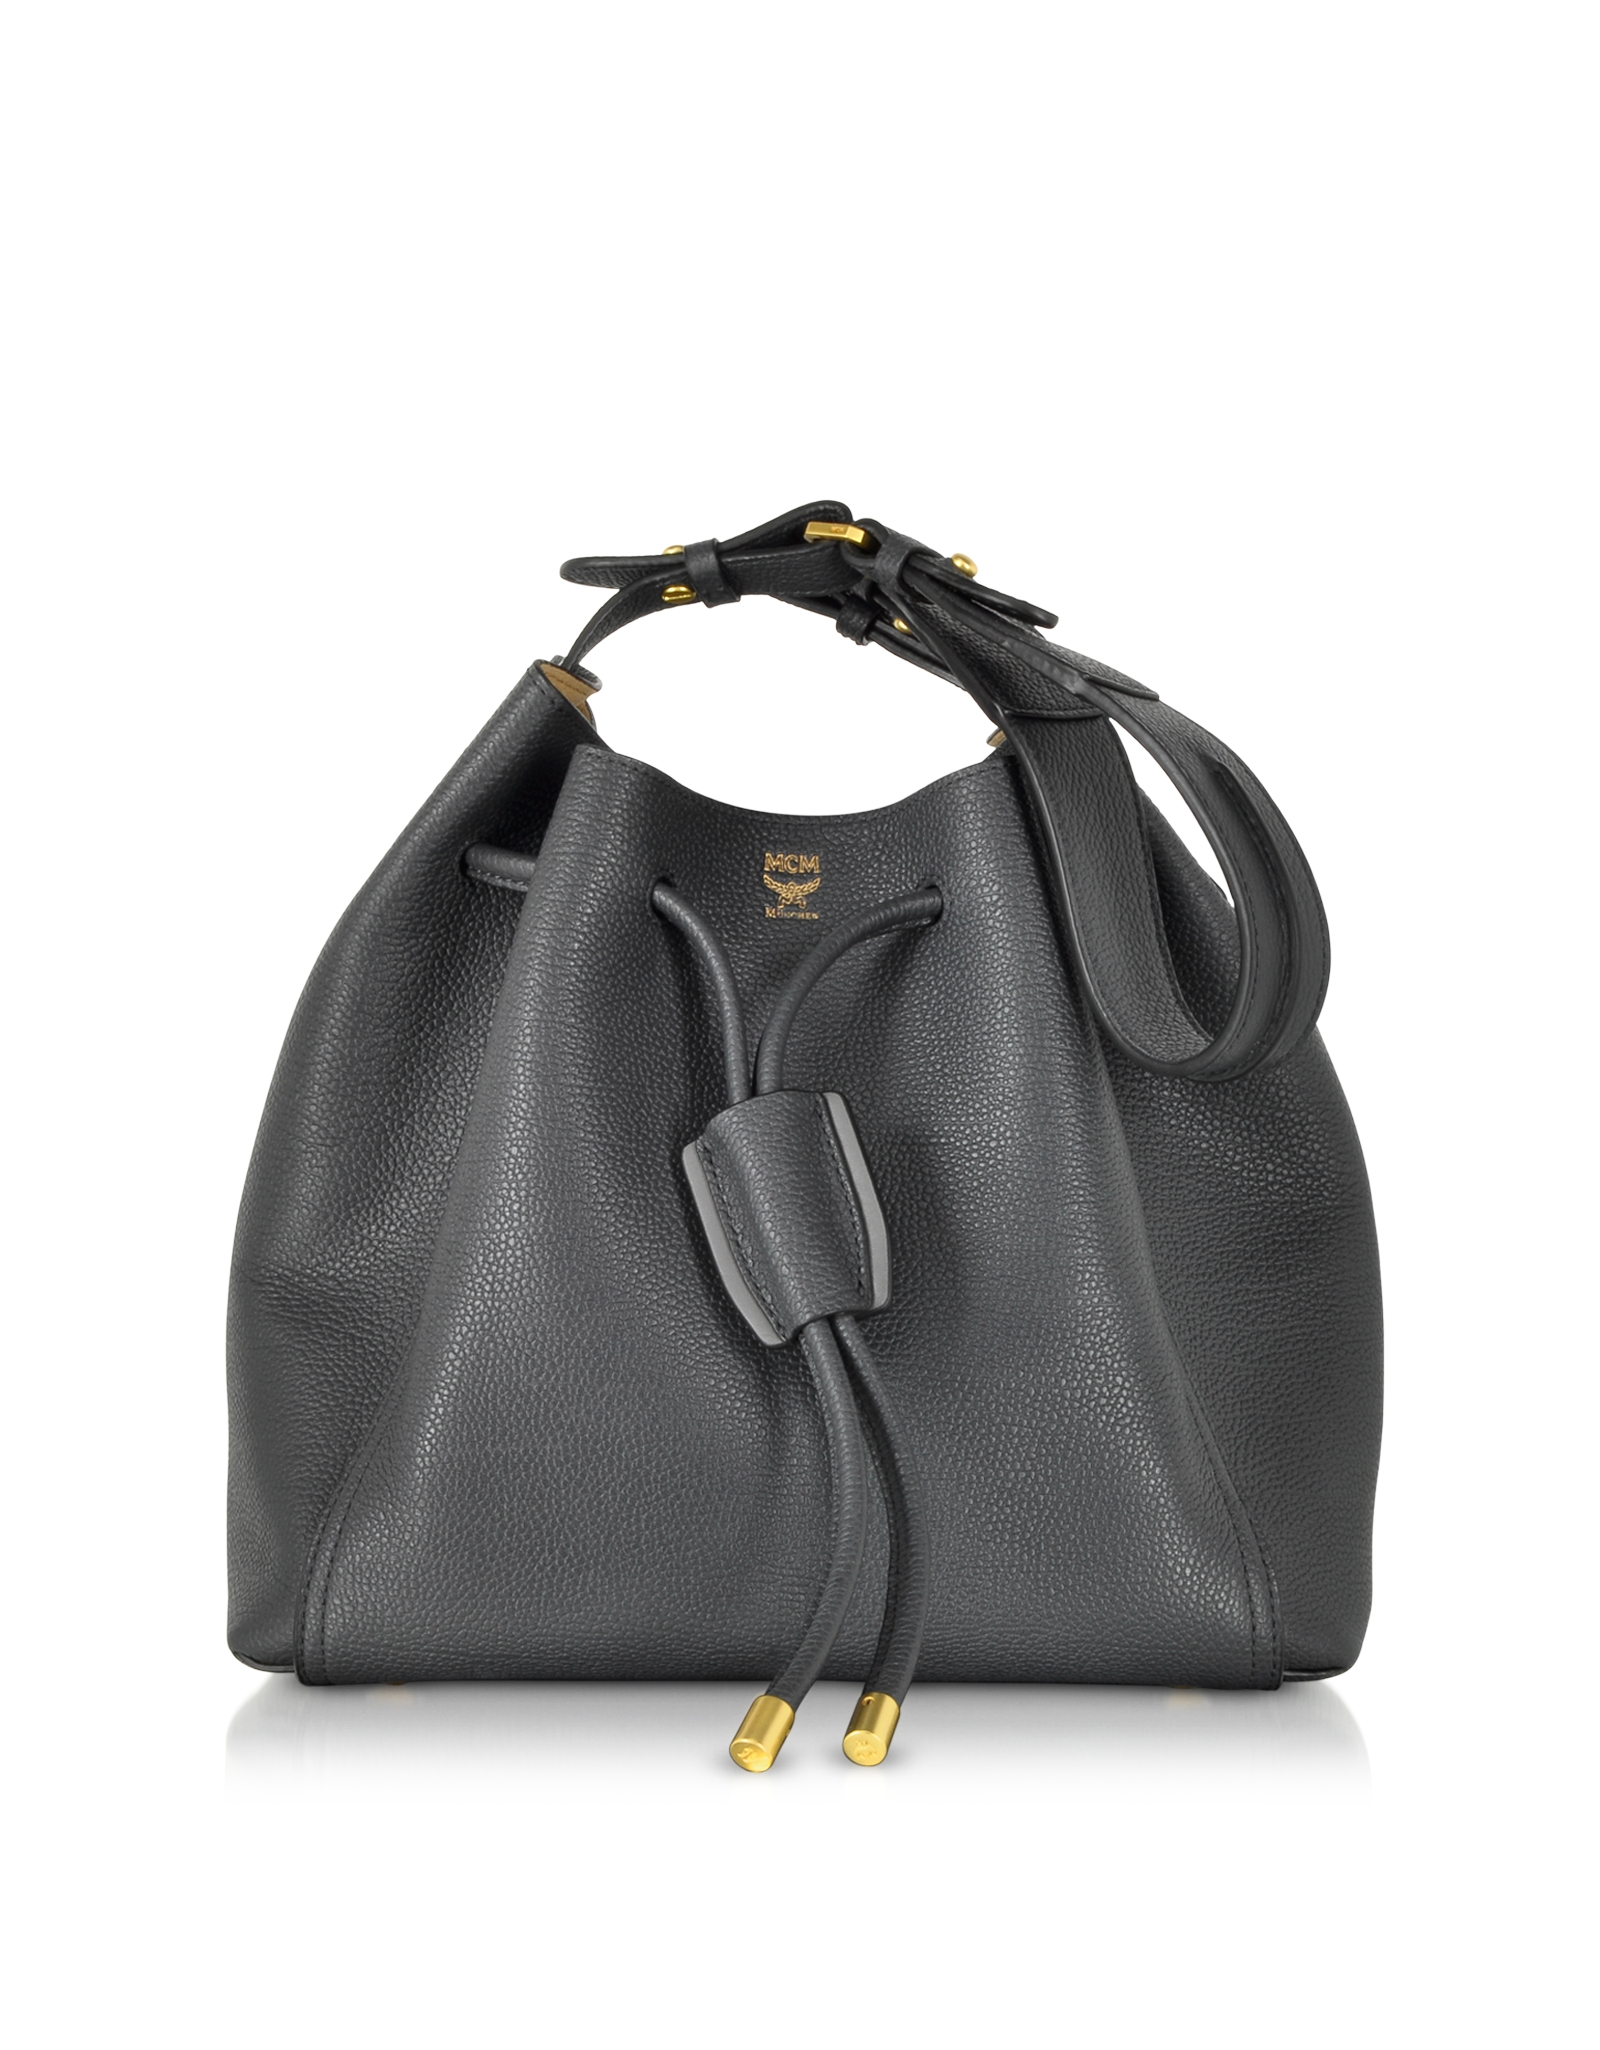 Lyst - Mcm Milla Phantom Grey Leather Medium Bucket Bag in Gray